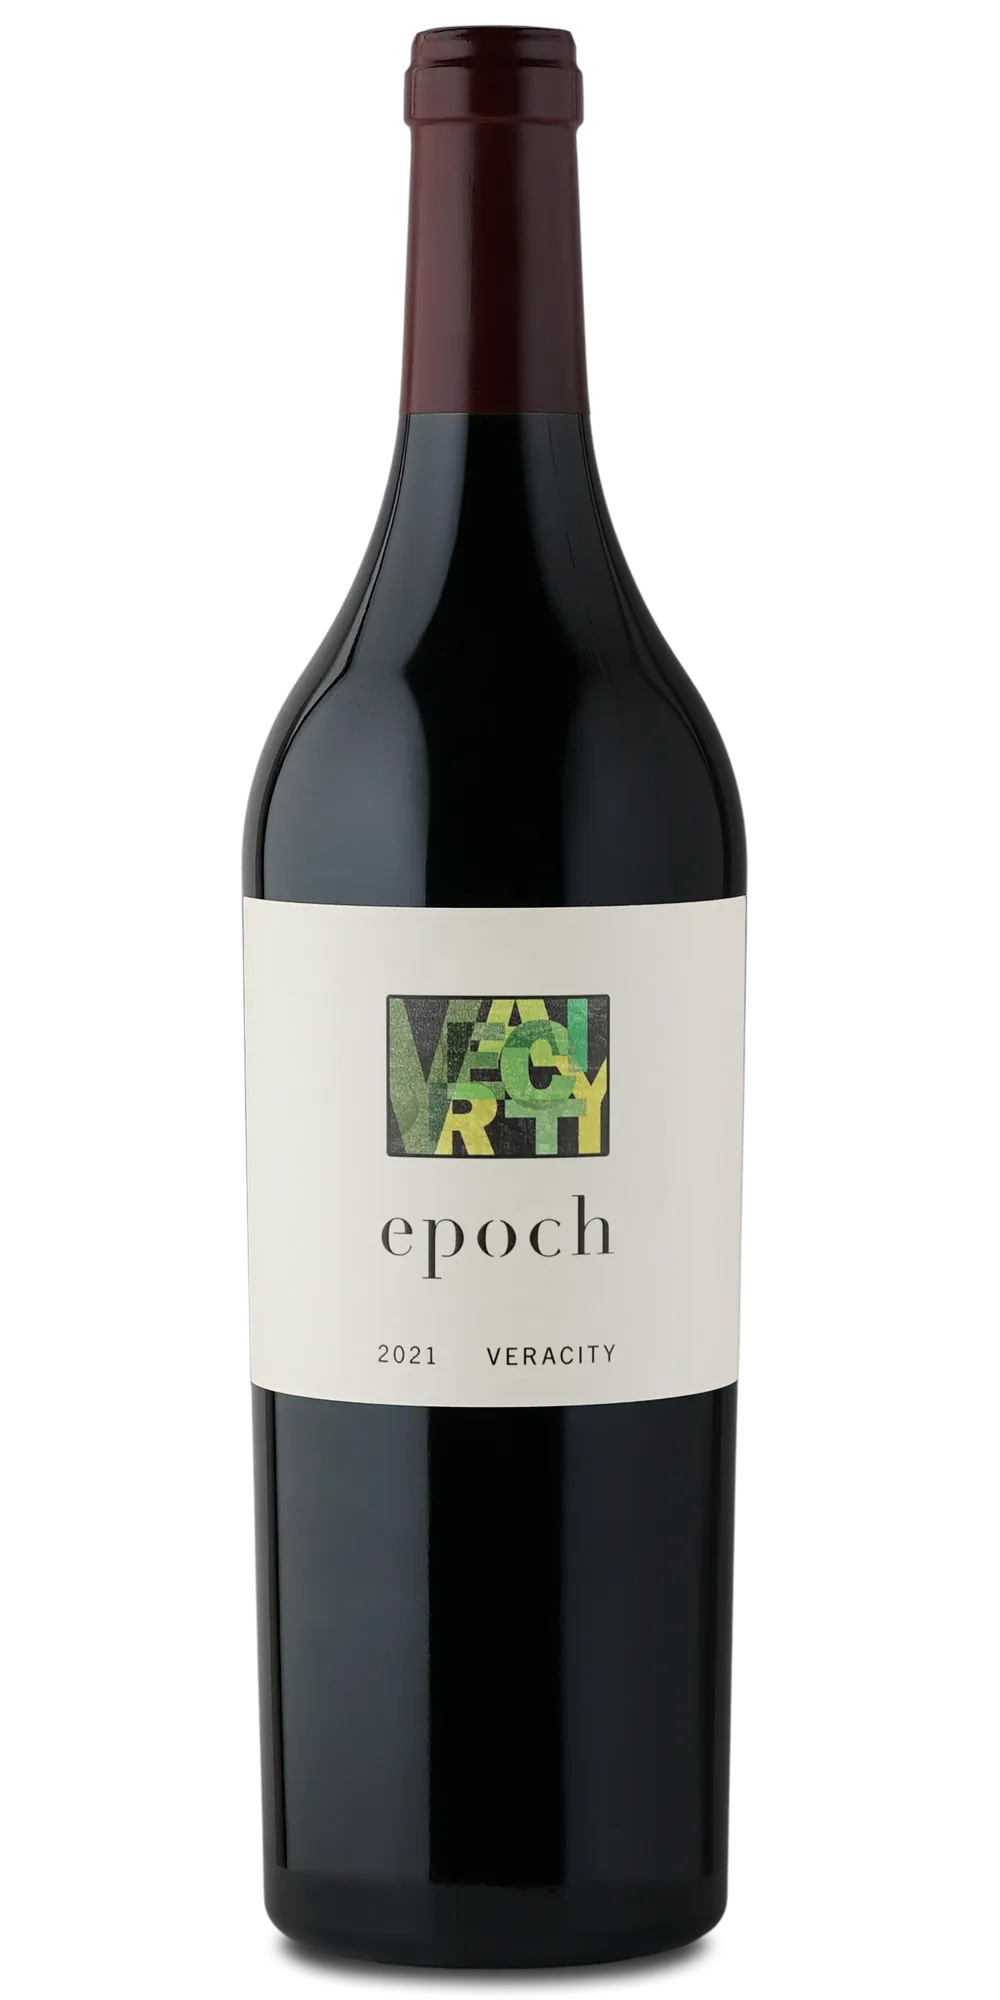 Bottle of 2021 Epoch Veracity